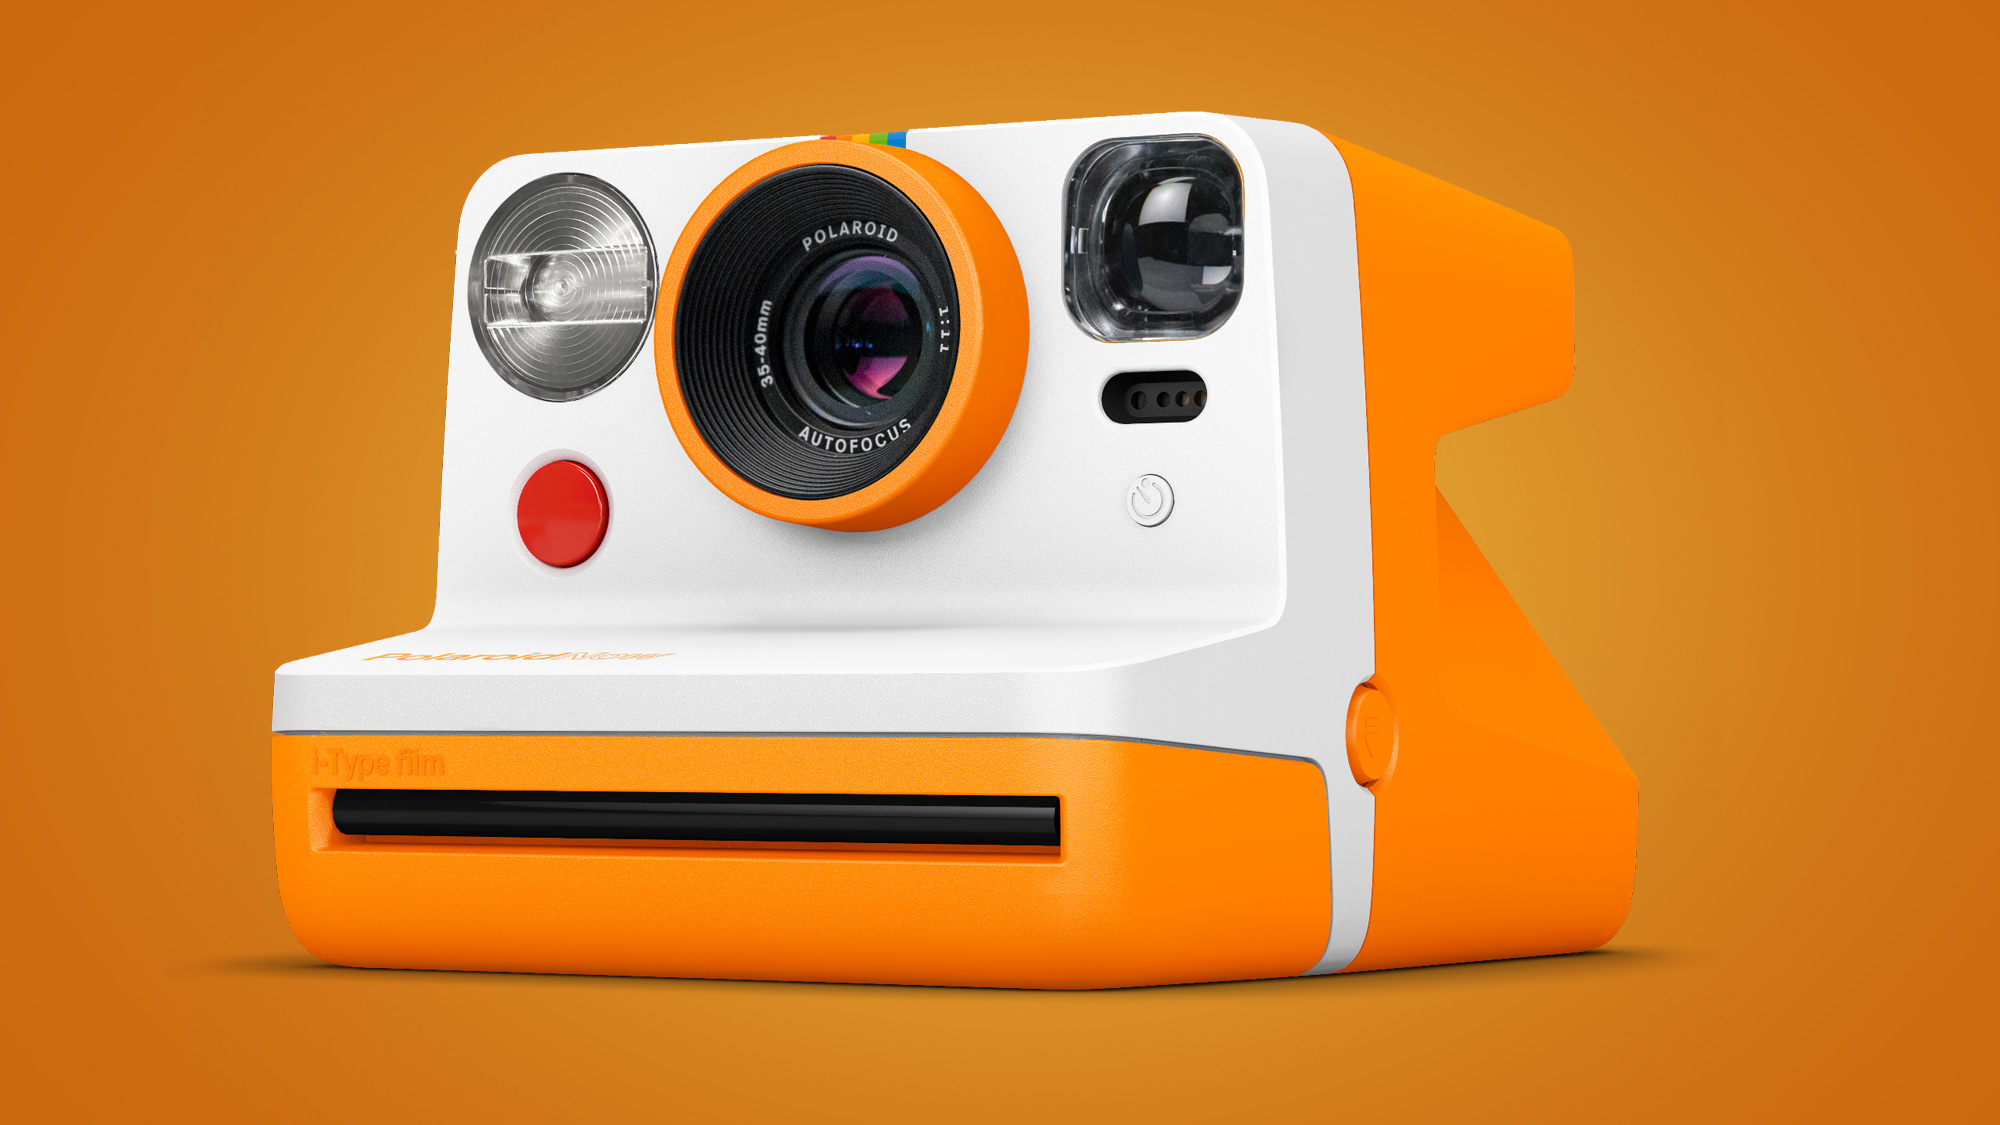 Canon Zoemini S Instant Camera Review - Verdict